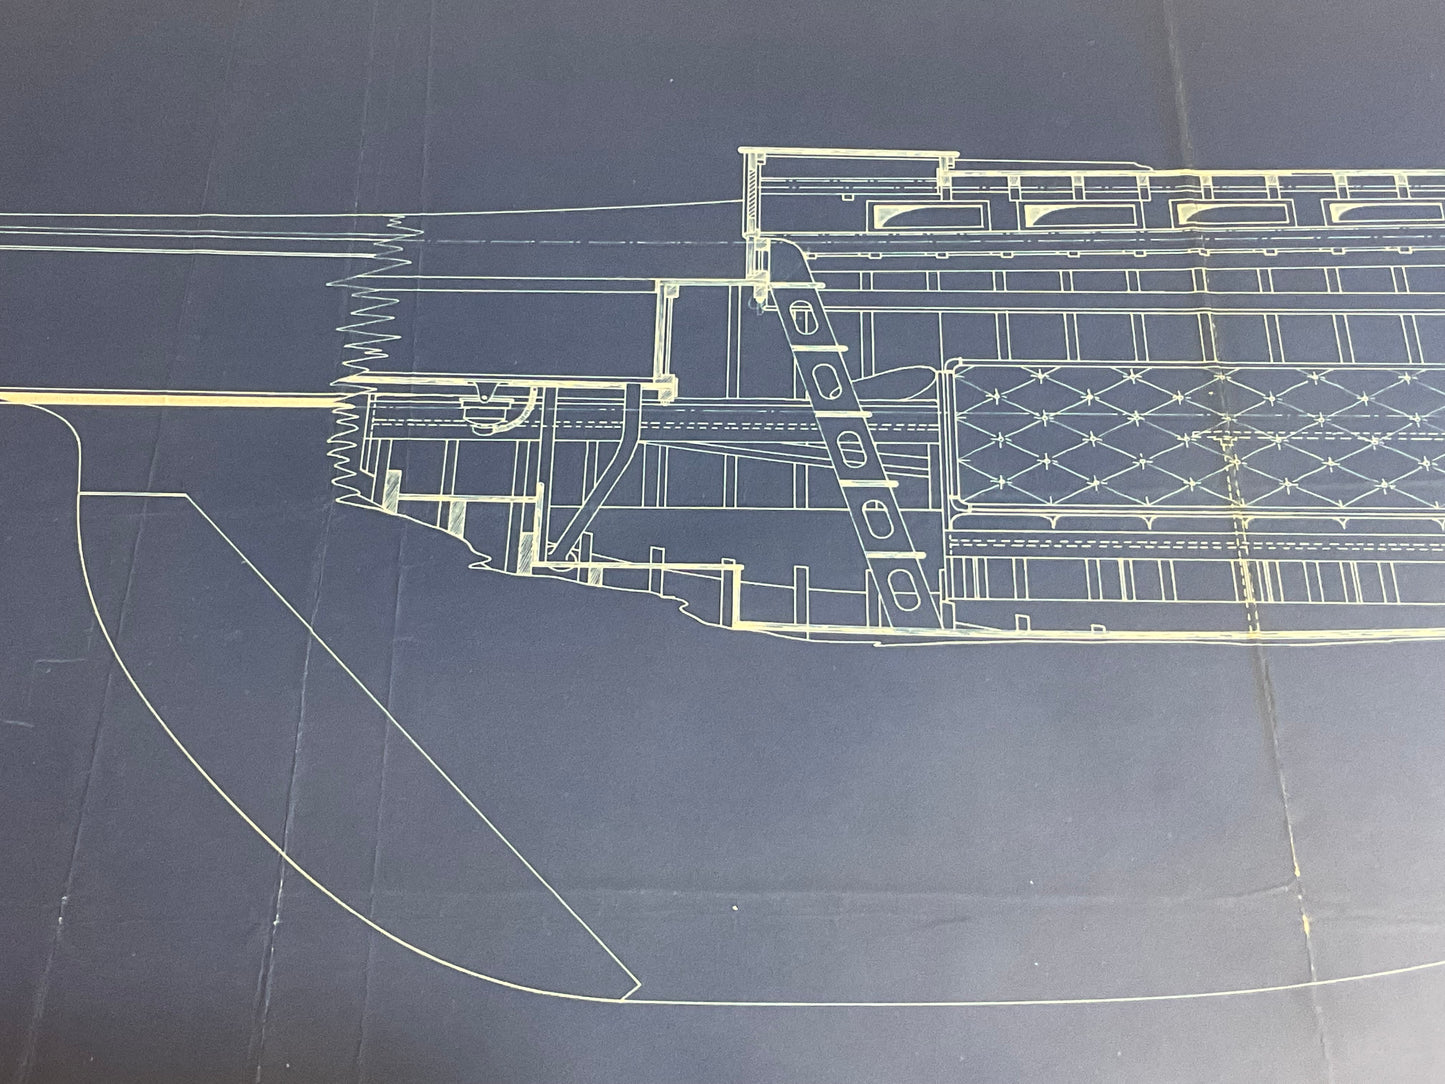 Yacht Blueprint of the Q Class Sloop "TARTAR"